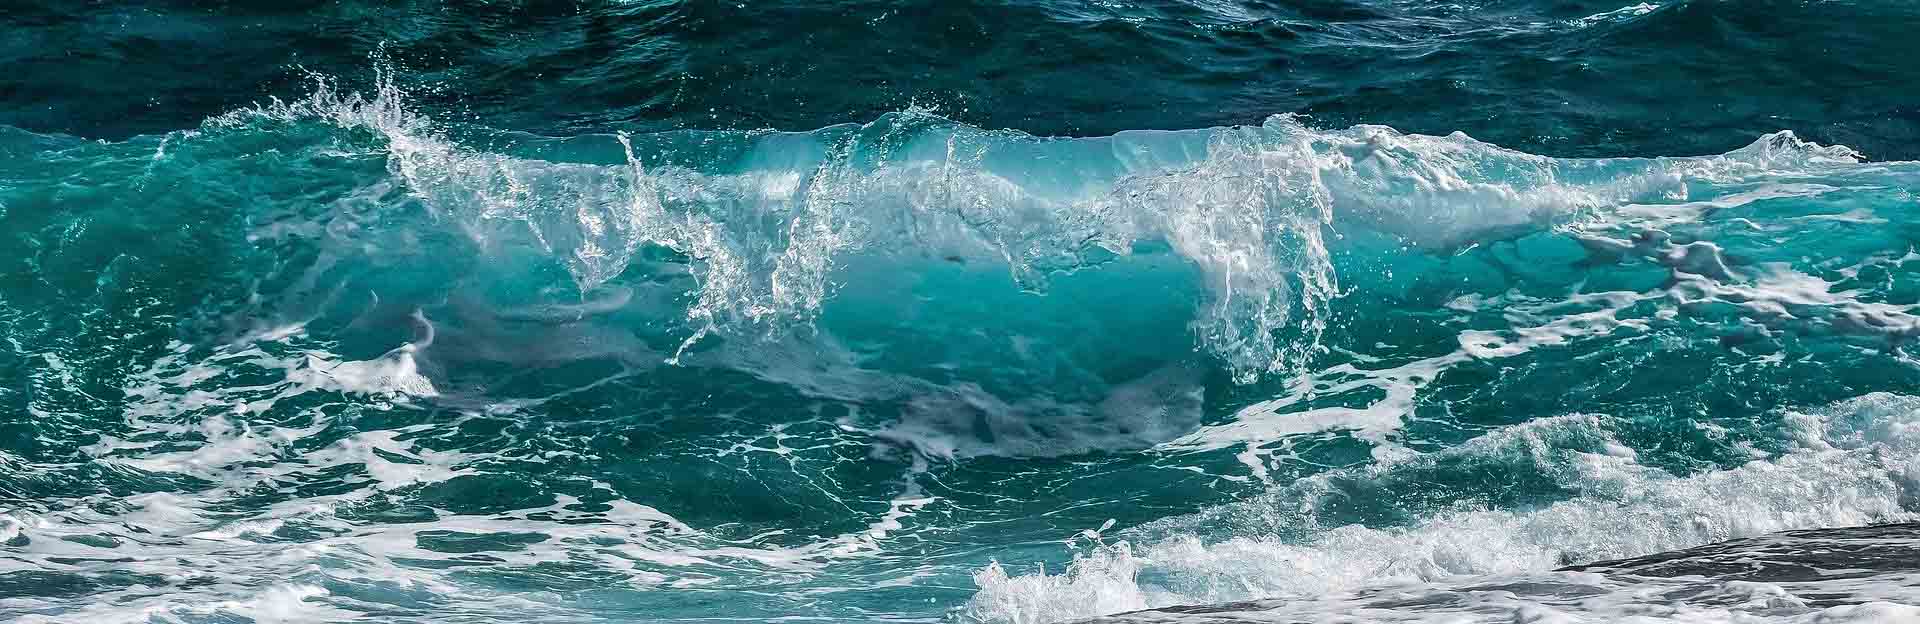 Ocean wave / pixabay.com